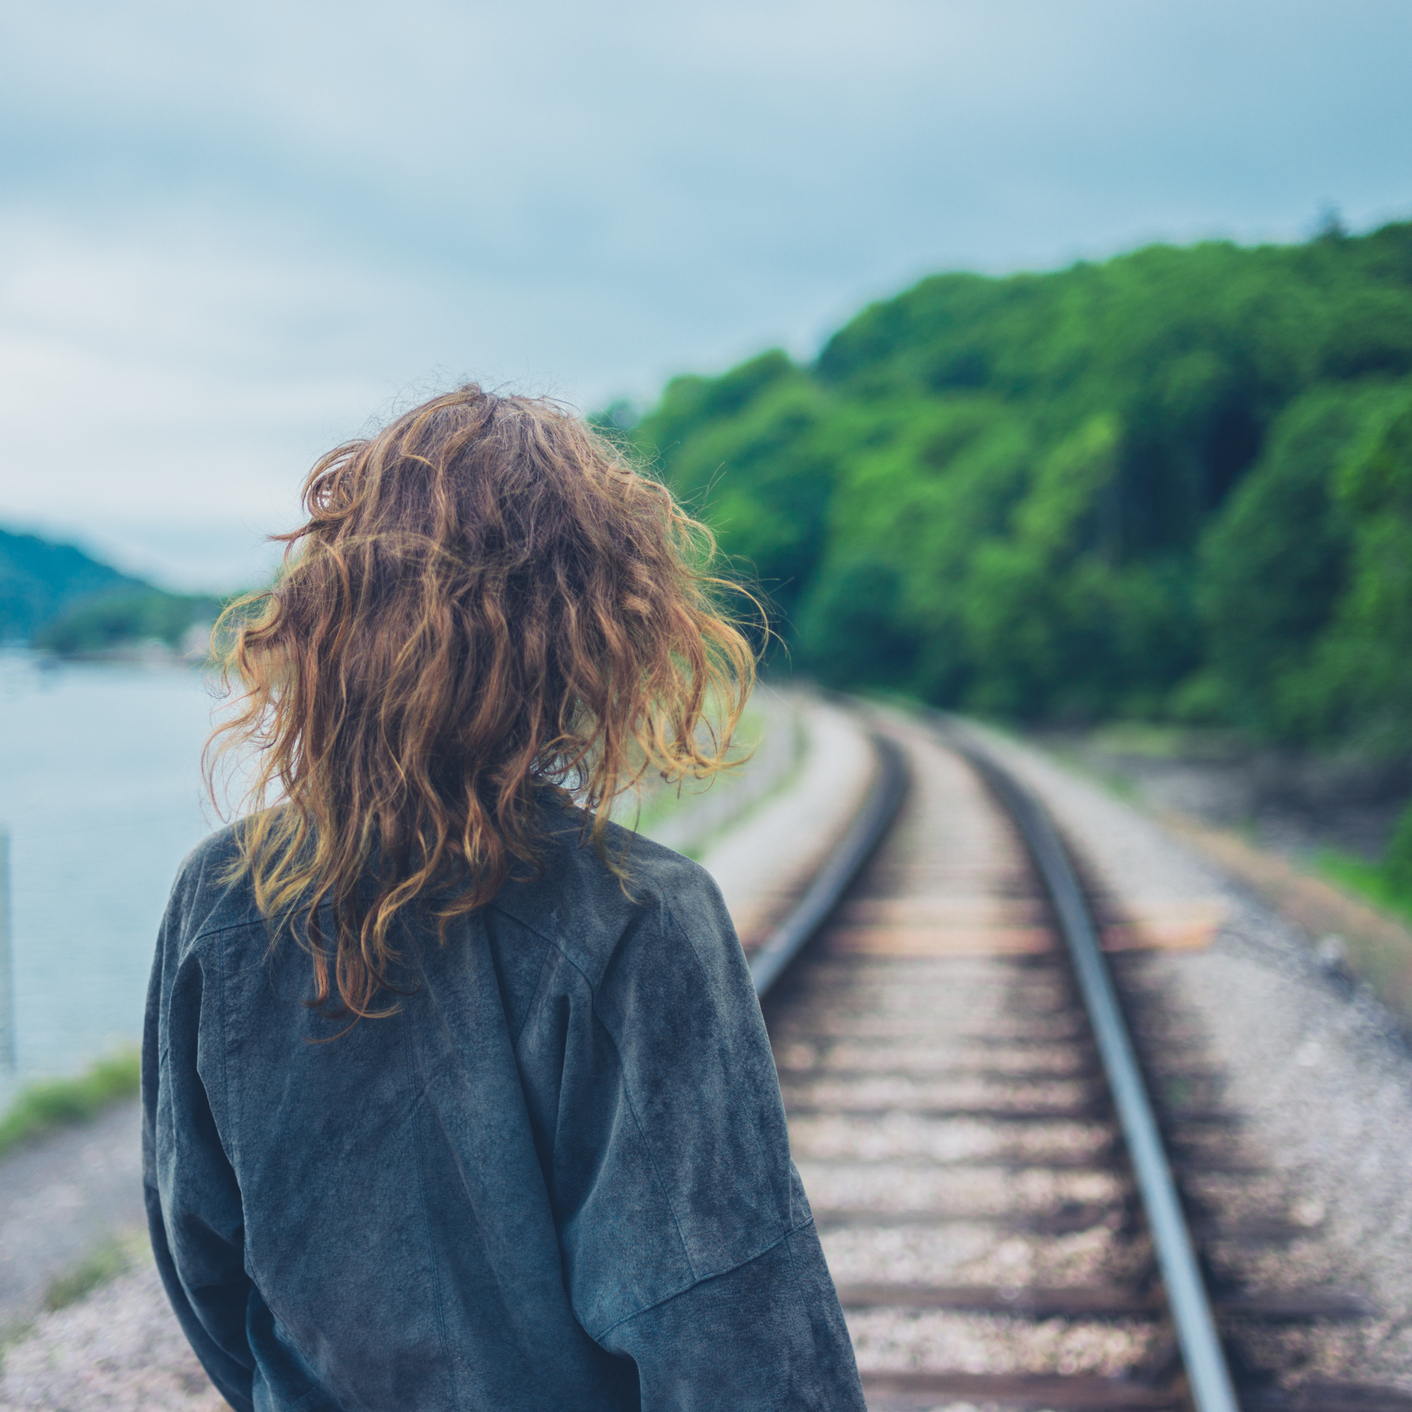 young woman walking along railroad tracks